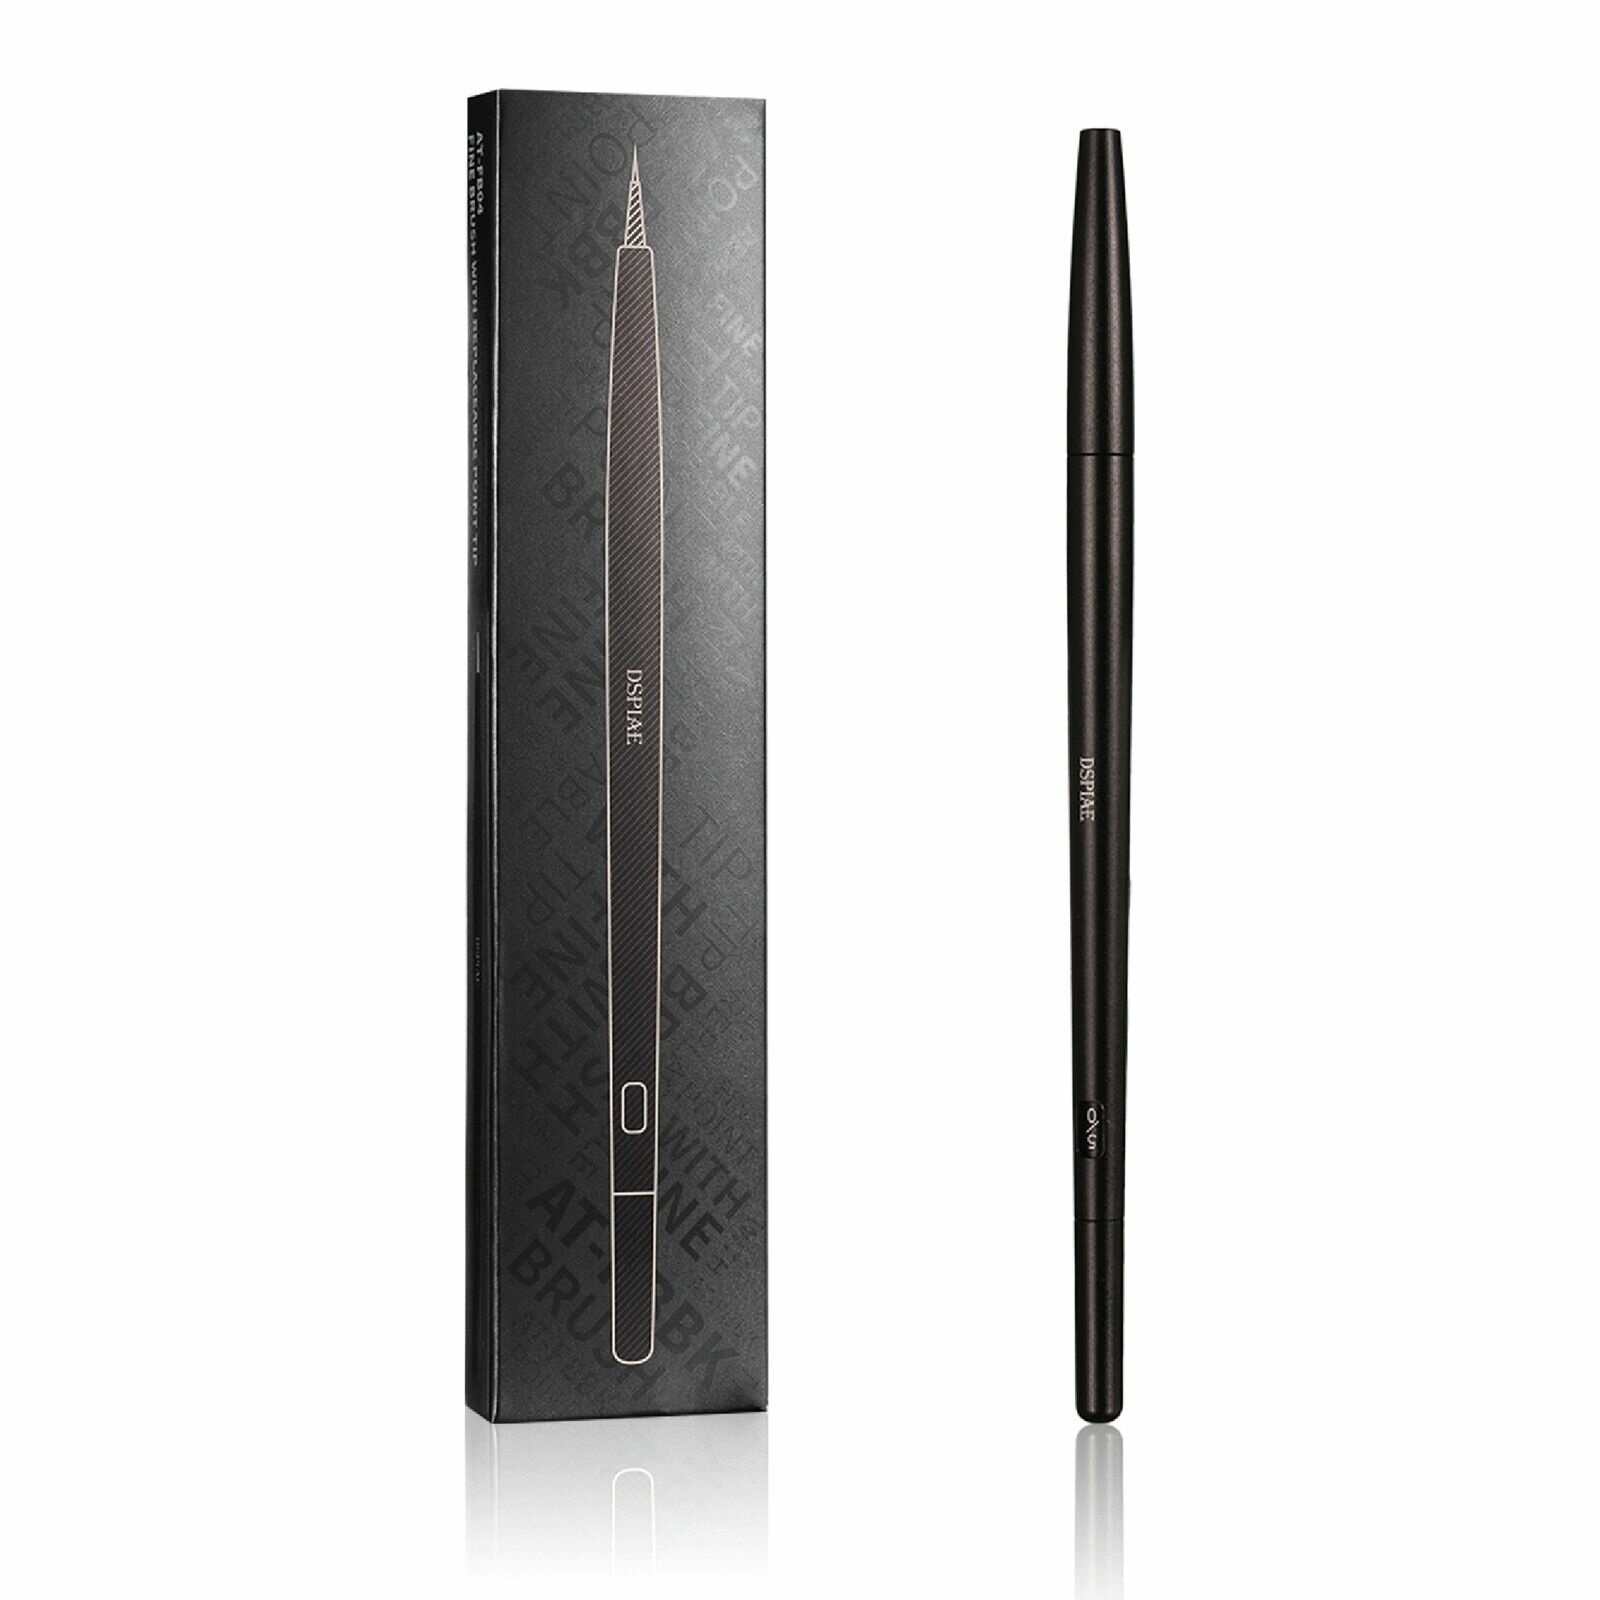 AT-FB04 DSPIAE Aluminum Brush with replaceable tip, black